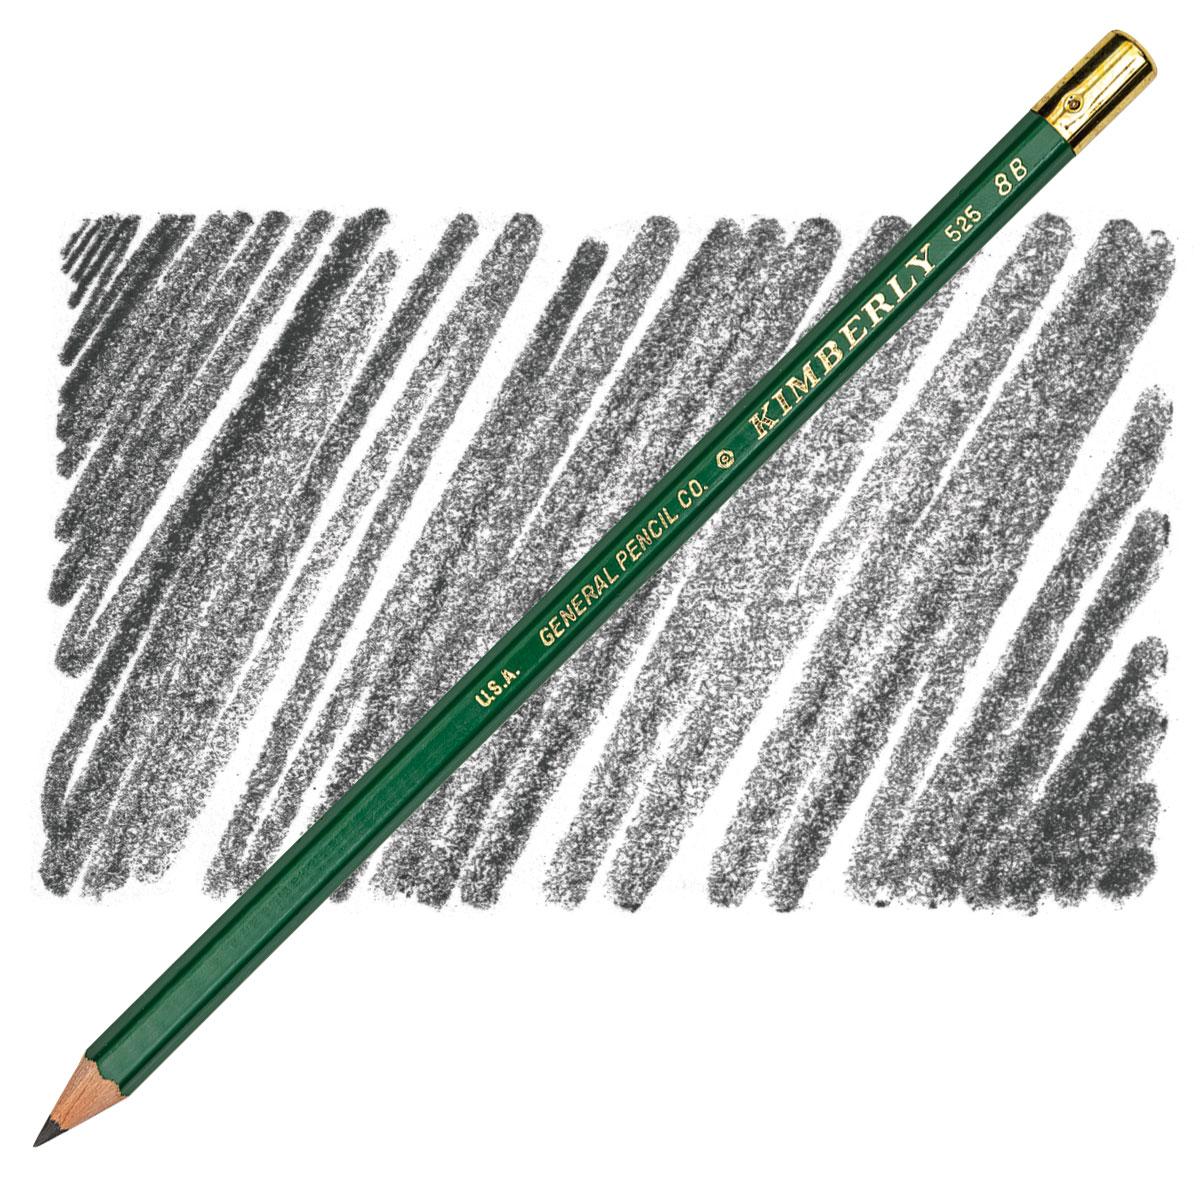 General's Kimberly Graphite Pencil - 8B